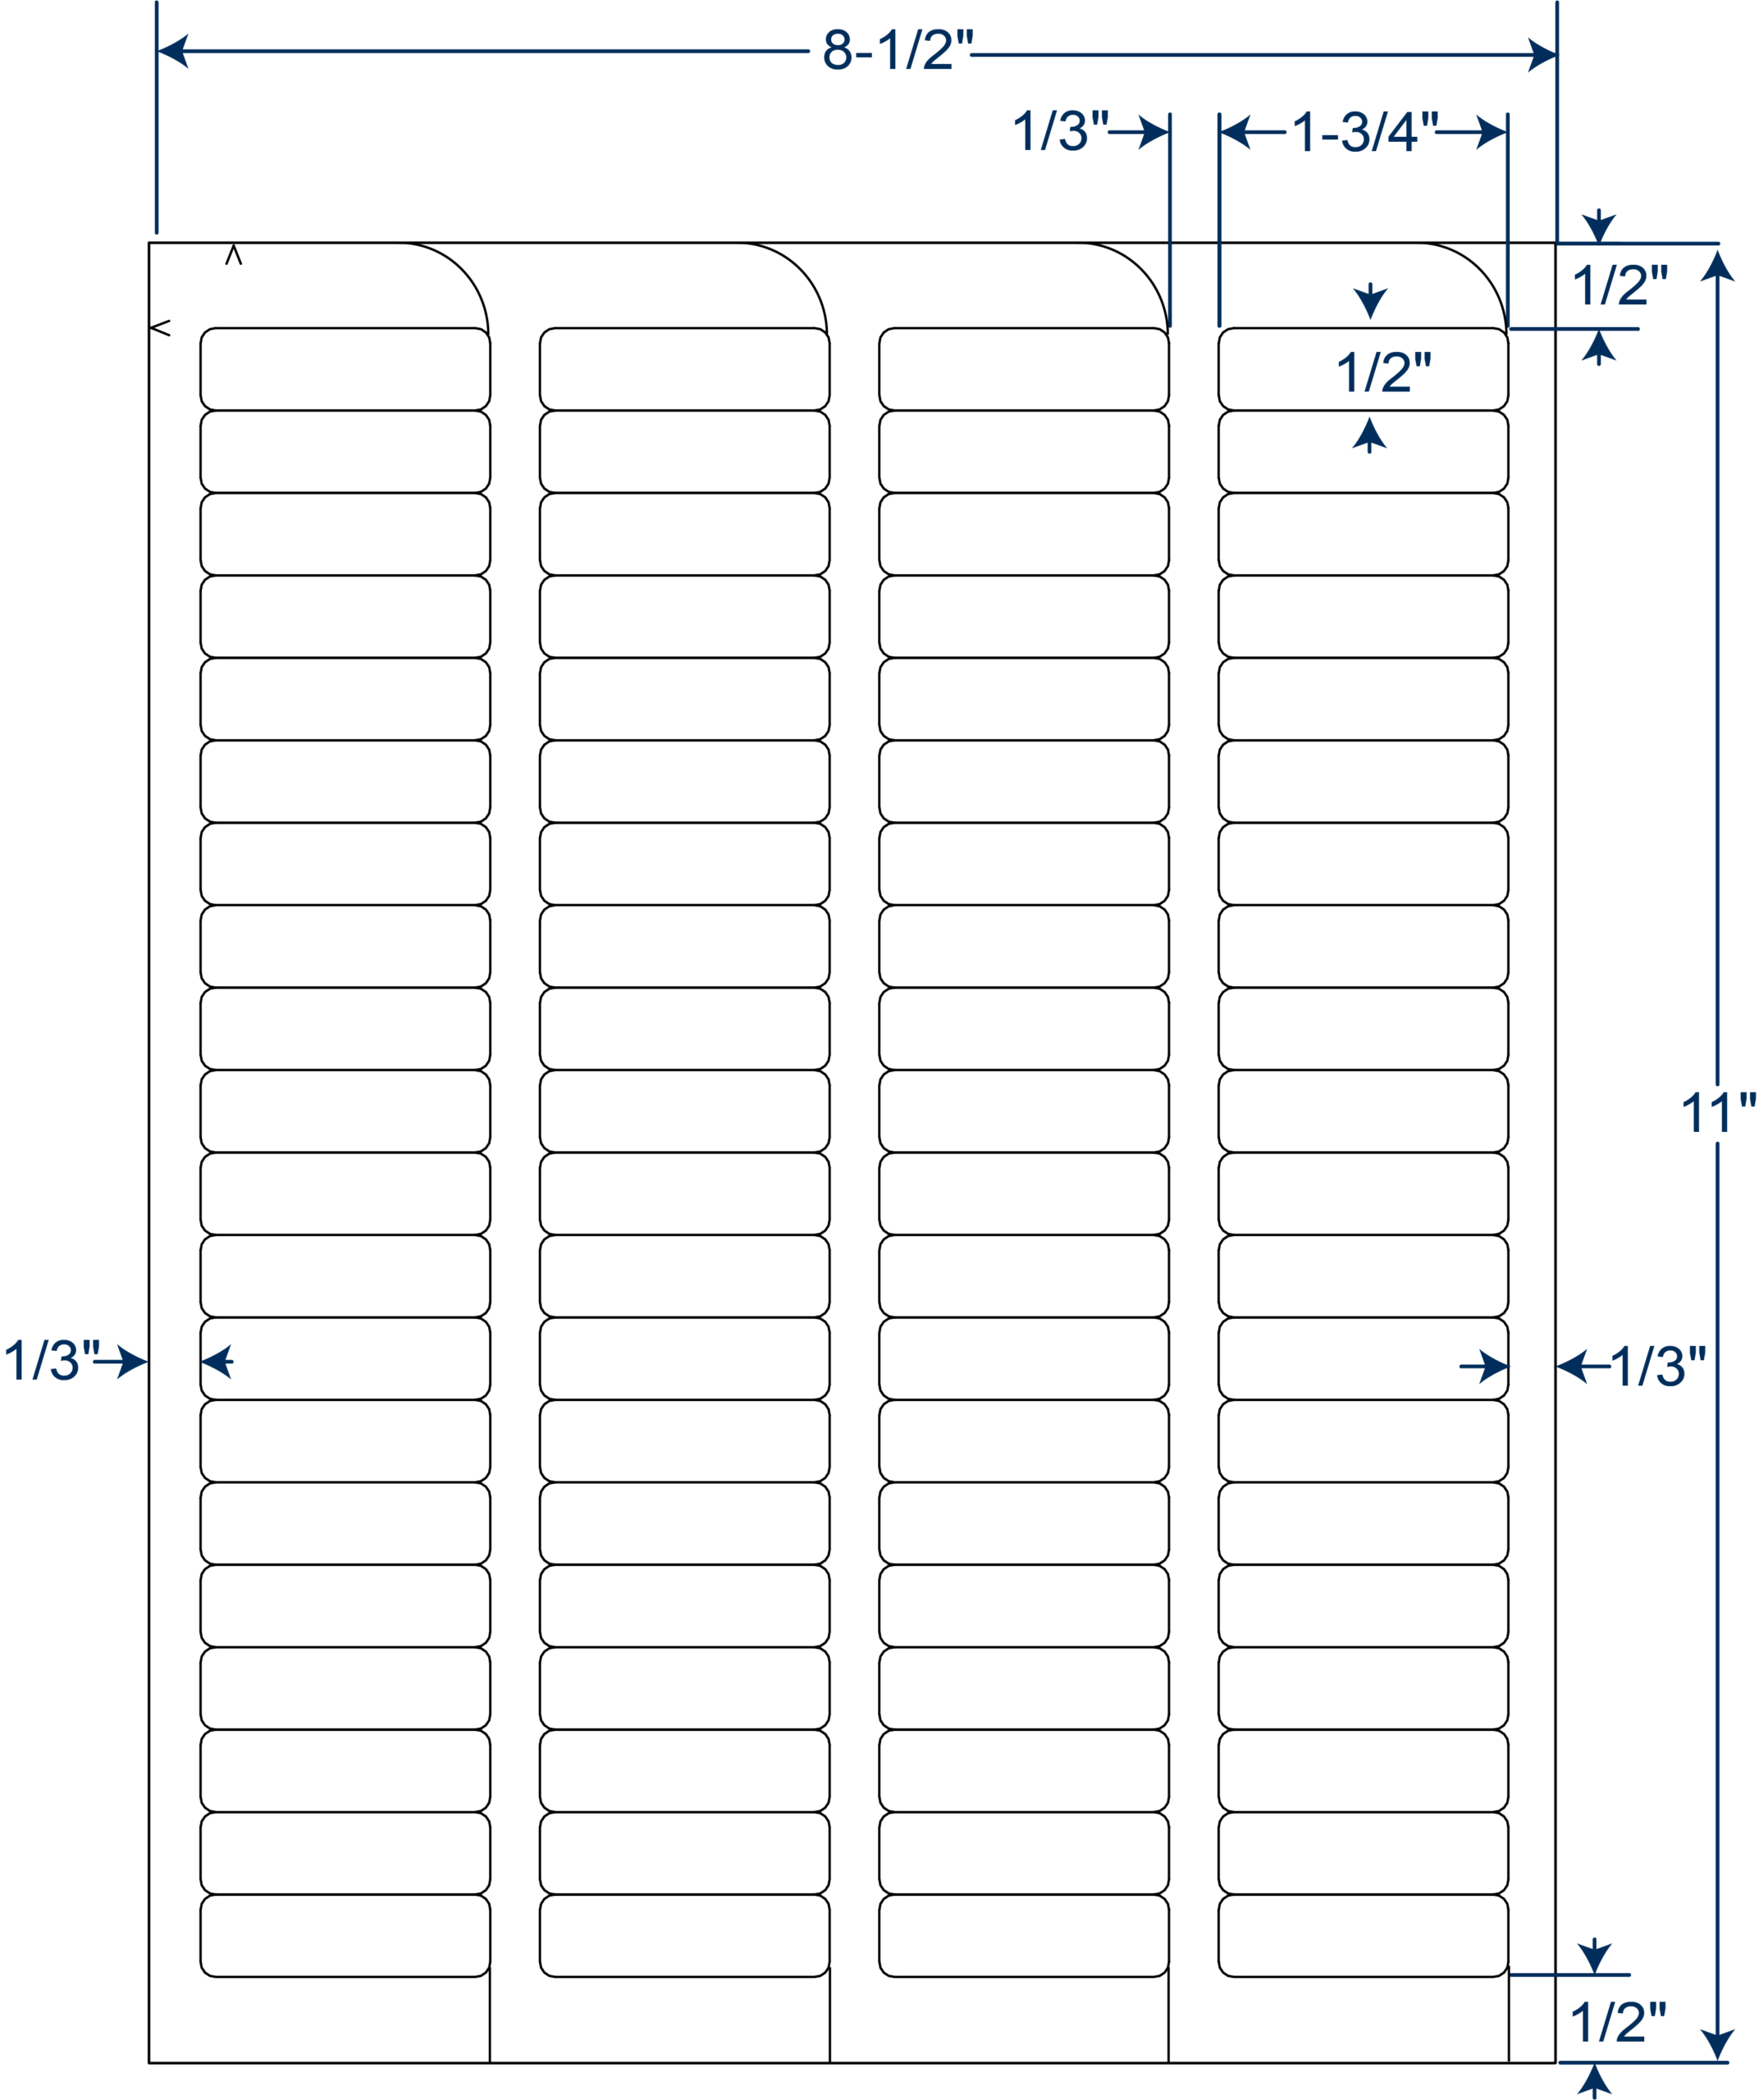 1-3/4" x 1/2" FABTab‰ã¢ Sheeted Labels (1,000 sheets)